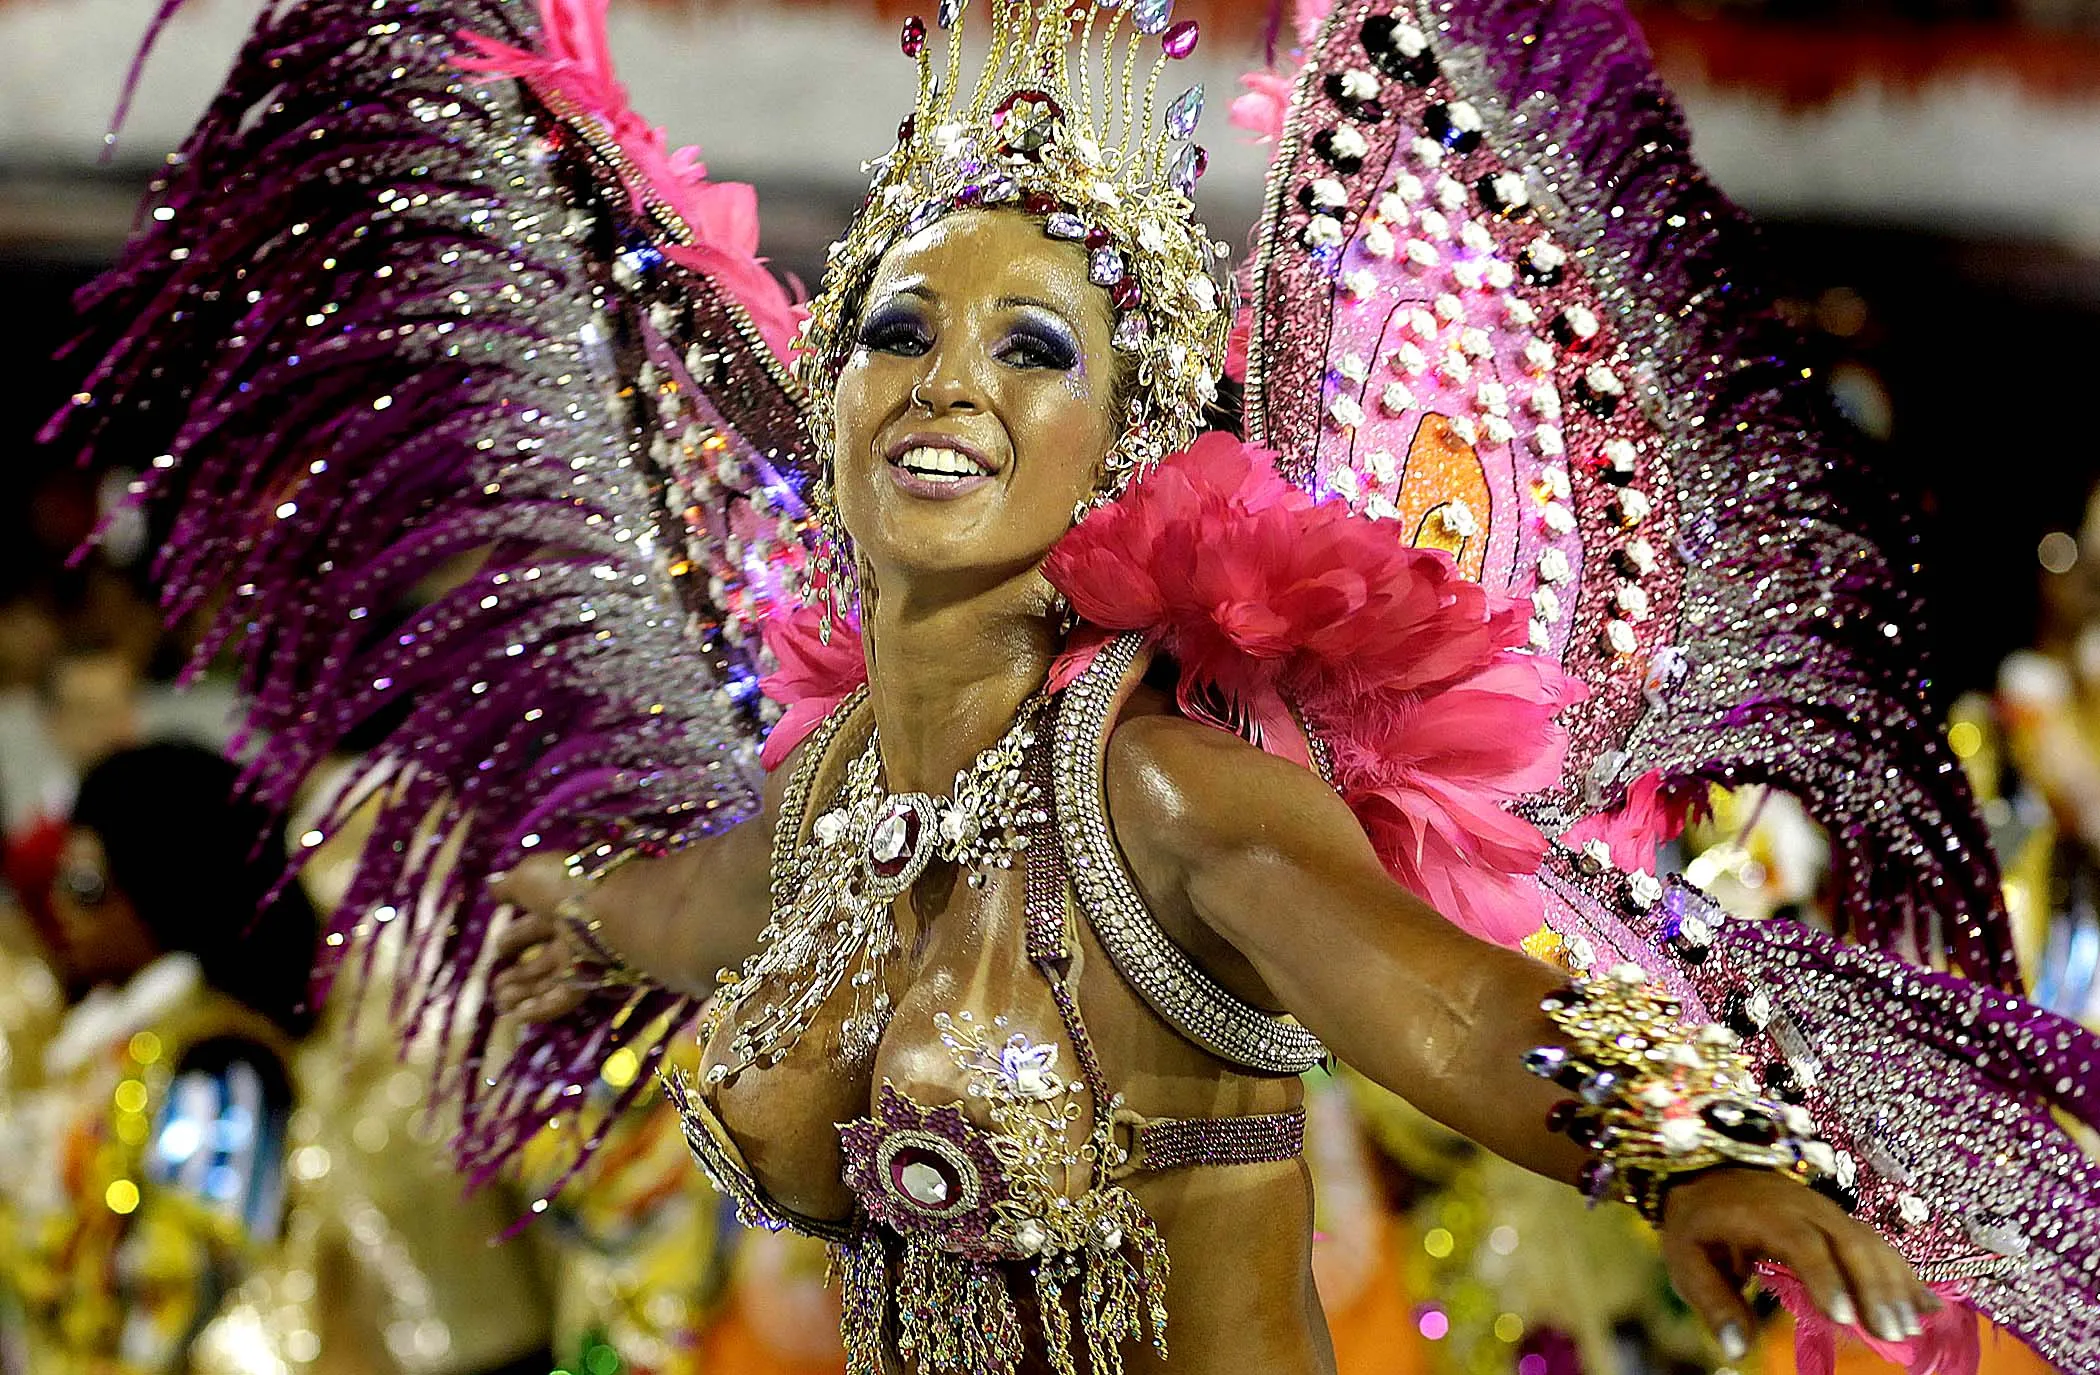 Звезды карнавала. Карнавал в Рио-де-Жанейро. Карнавал в Рио-де-Жанейро (бразильский карнавал). Бразильский карнавал Бразилия. Бразильский карнавал в Рио.